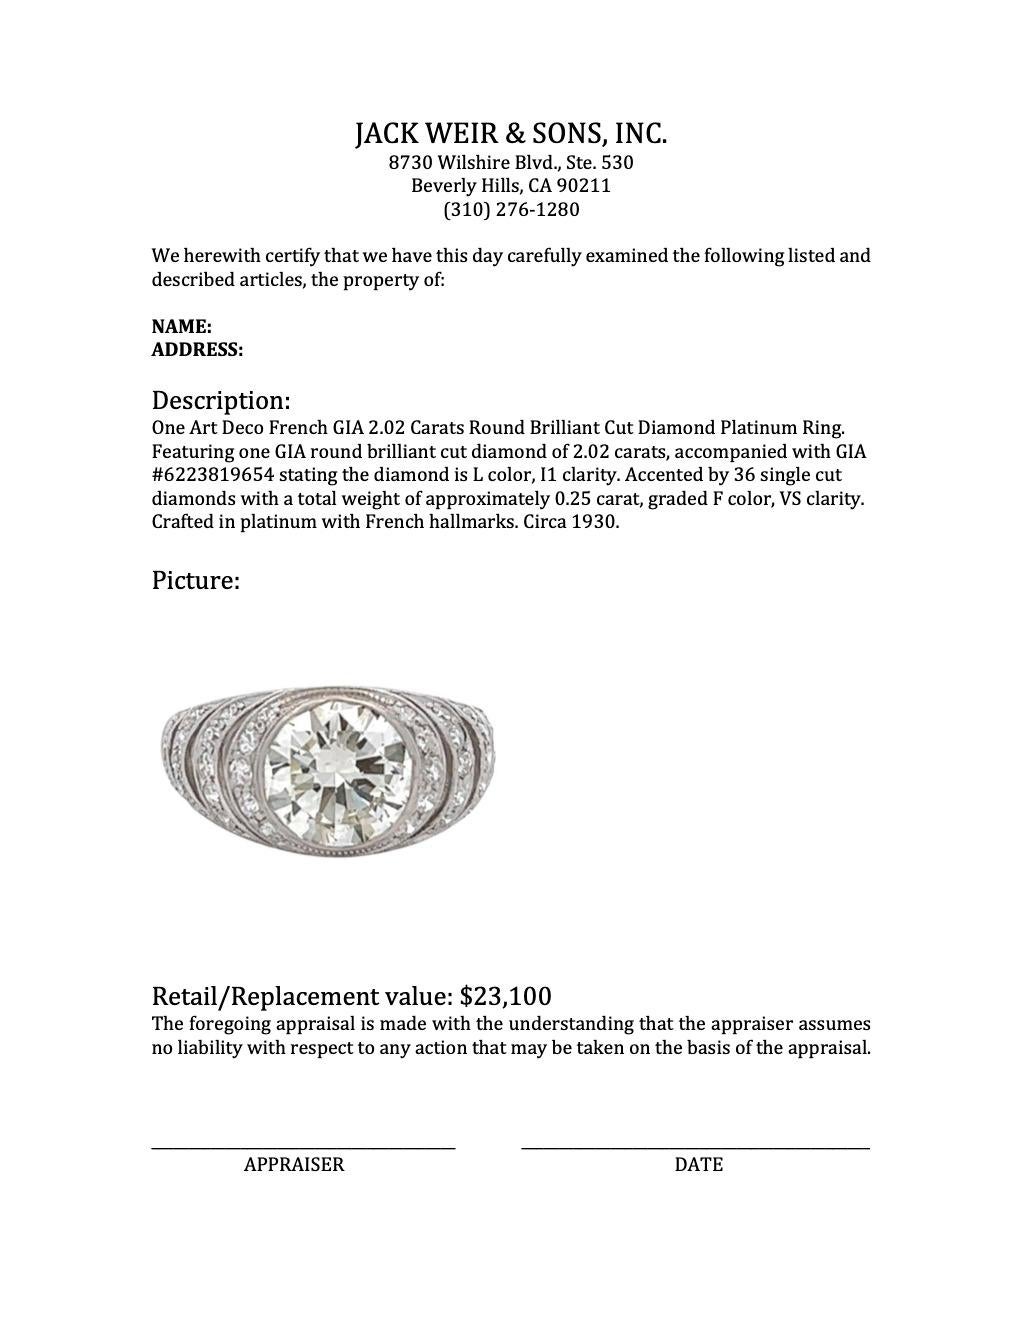 Art Deco French GIA 2.02 Carats Round Brilliant Cut Diamond Platinum Ring 3